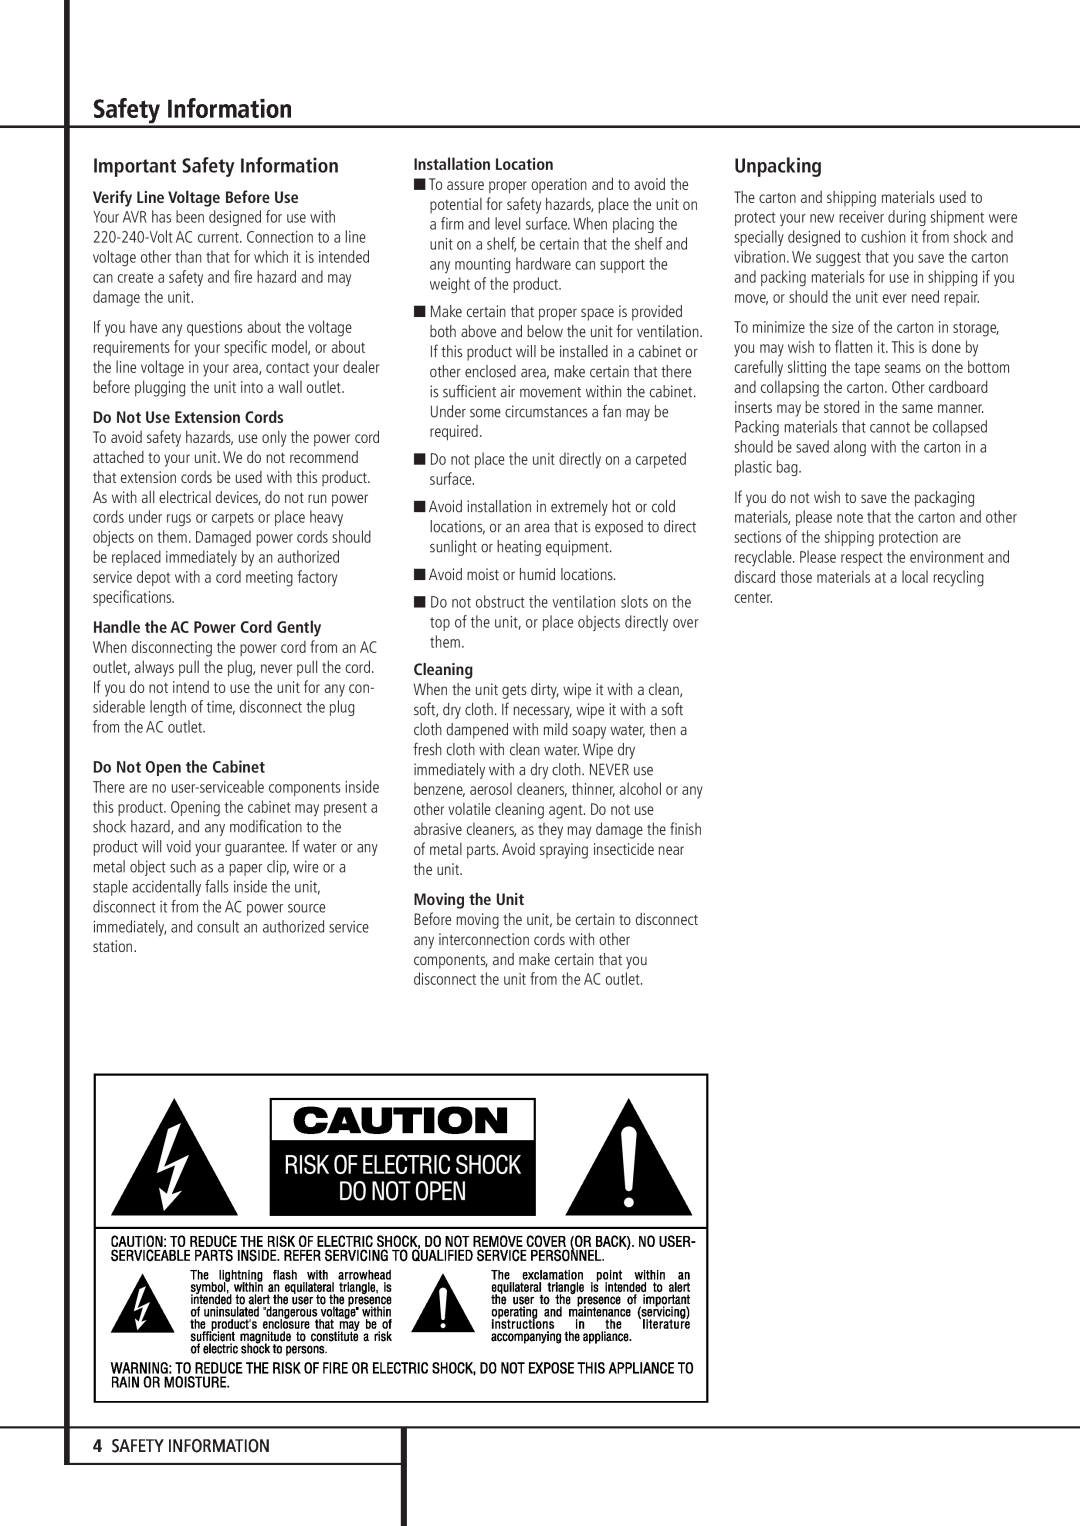 Harman-Kardon AVR 8500 Important Safety Information, Unpacking, 4SAFETY INFORMATION, Verify Line Voltage Before Use 